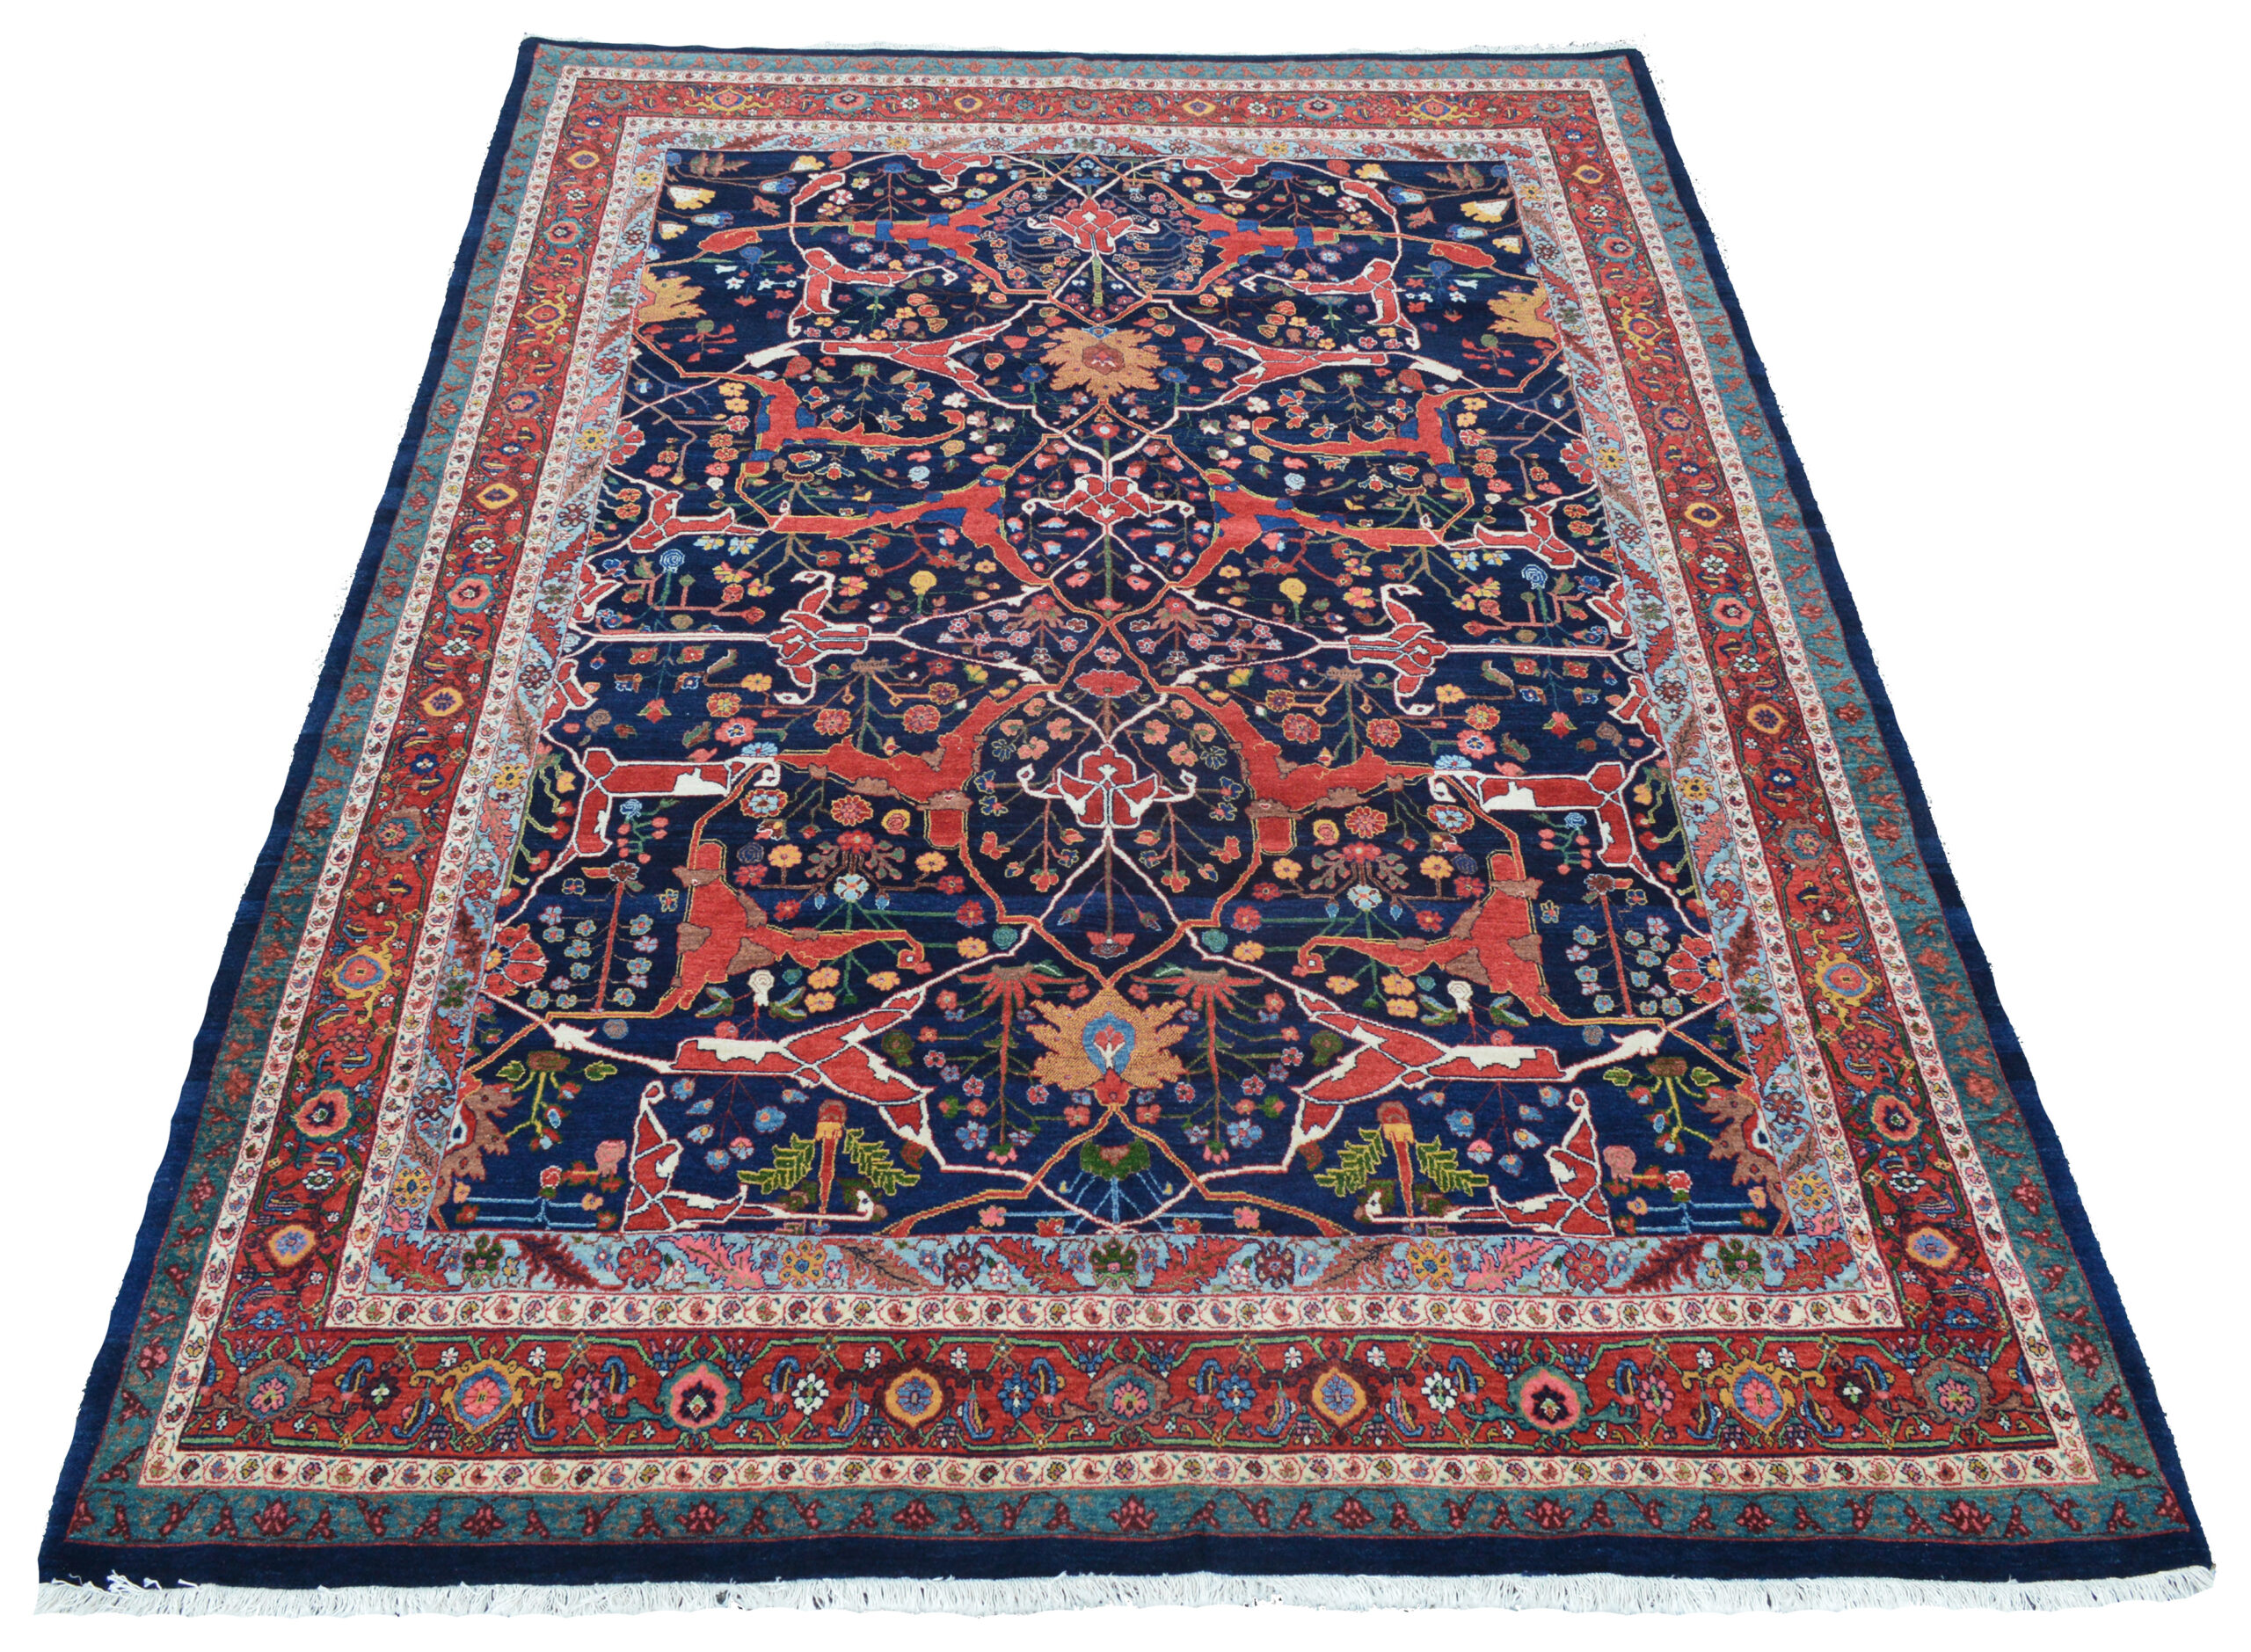 New hand woven natural dye Bidjar carpet with the classic Split Arabesque design - Douglas Stock Gallery, Oriental rugs Boston,Ma area